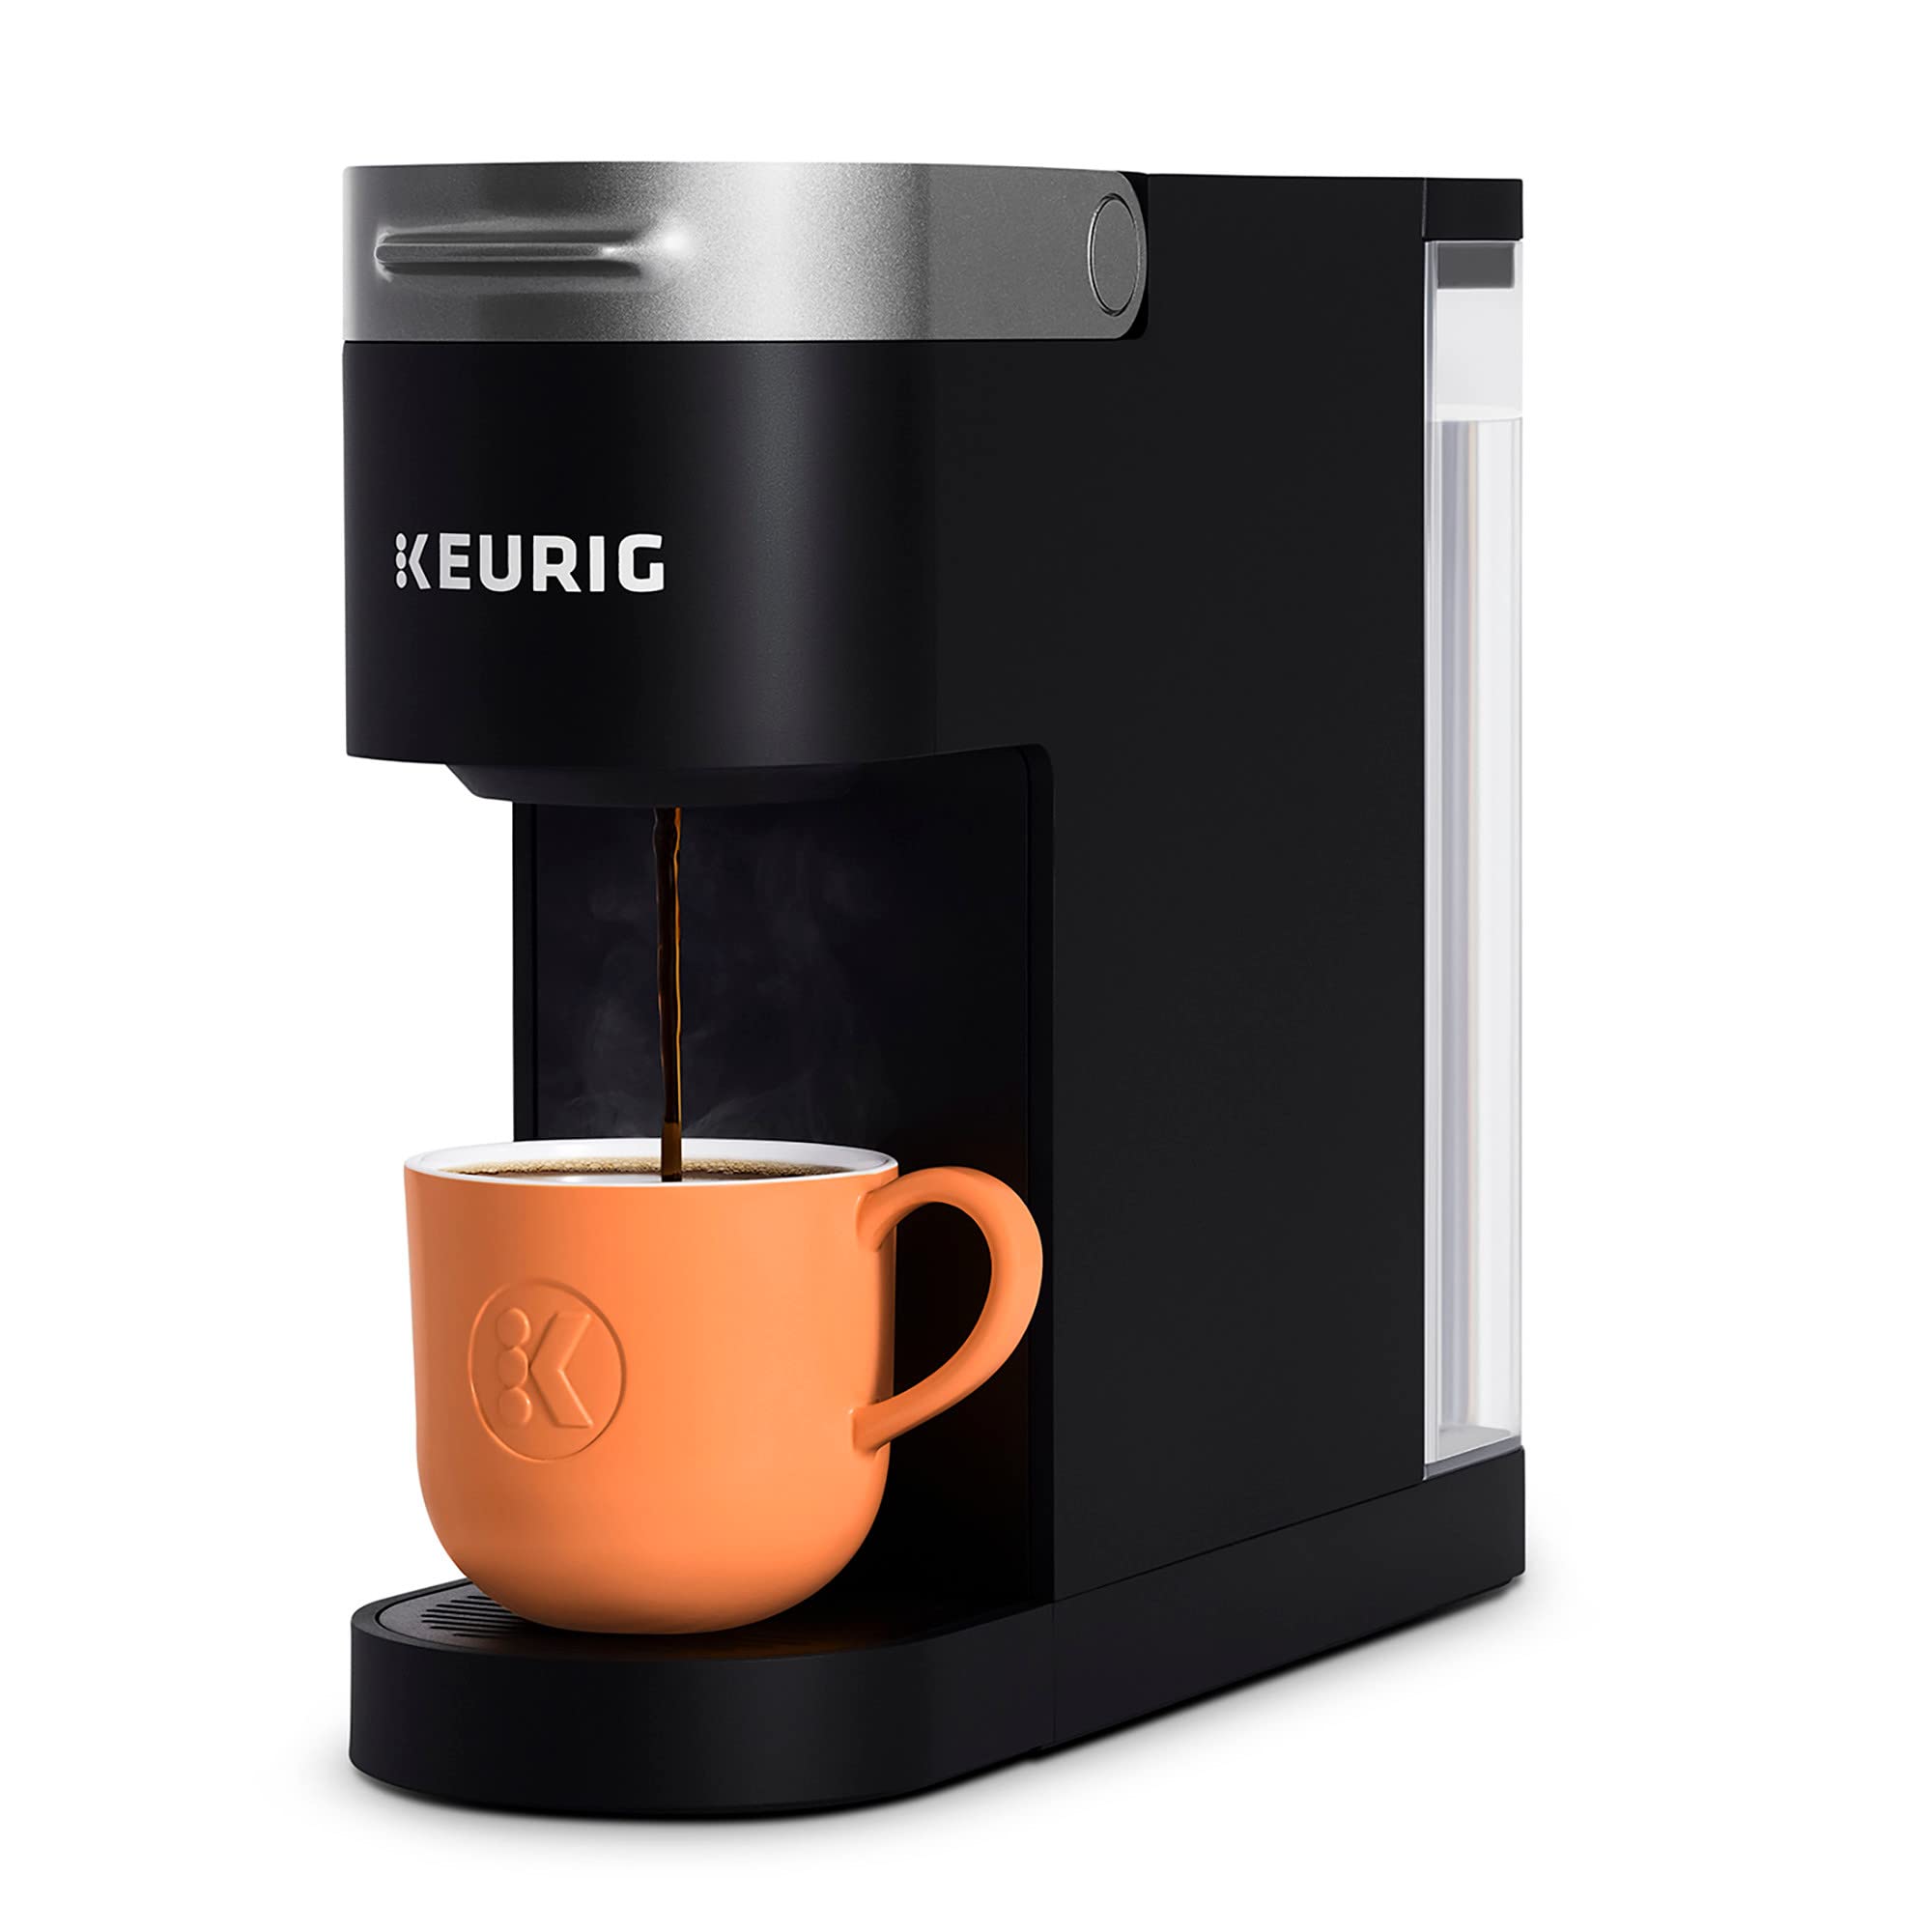 Keurig K-スリムシングルサーブKカップポッドコーヒーメーカー、マルチストリームテクノロジー、ブラック...